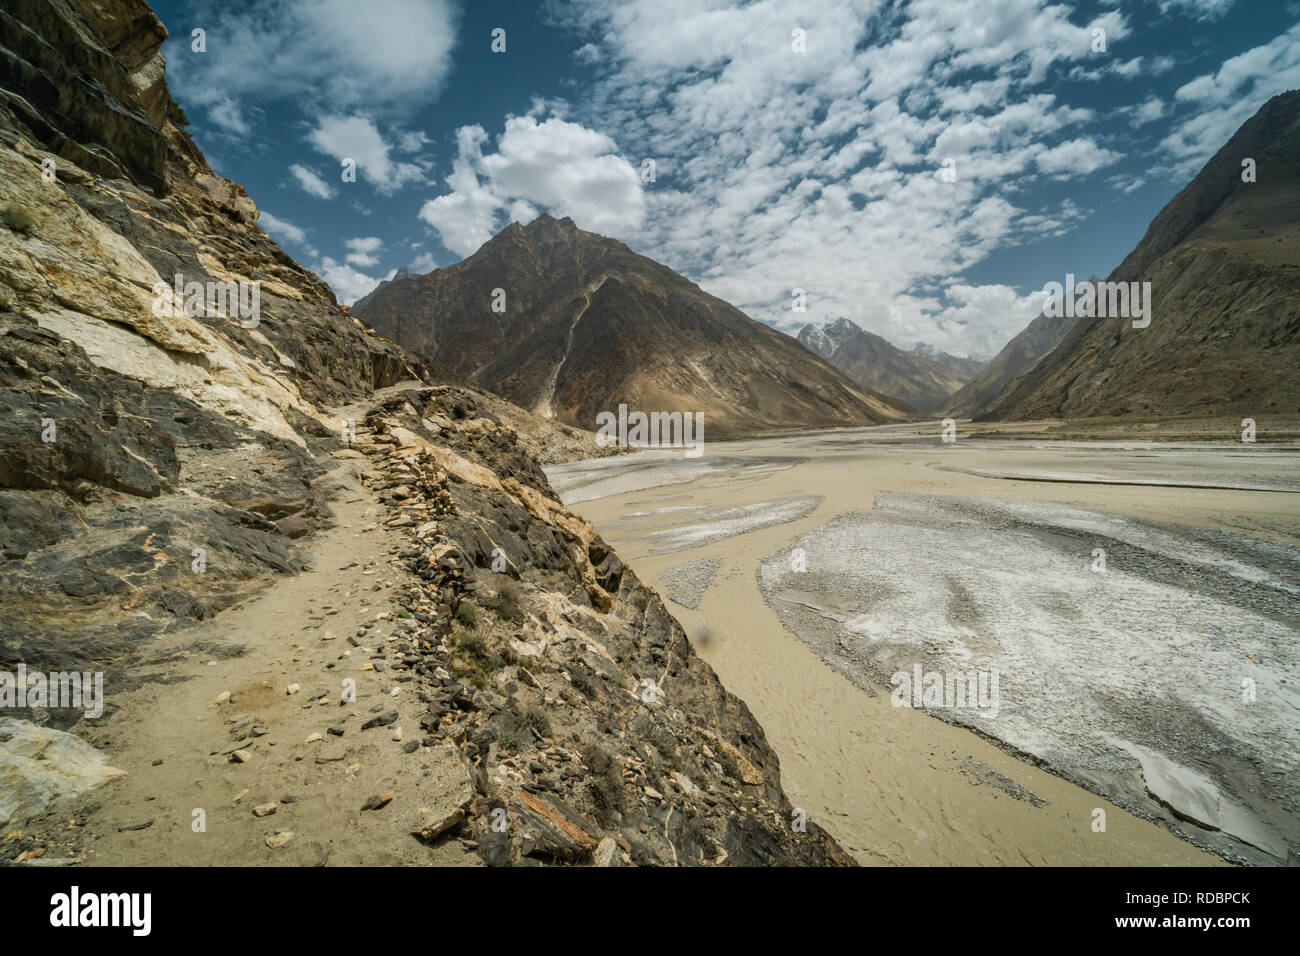 Scenic hiking trail leading to K2 base camp in Karakoram Mountains, Pakistan. Stock Photo